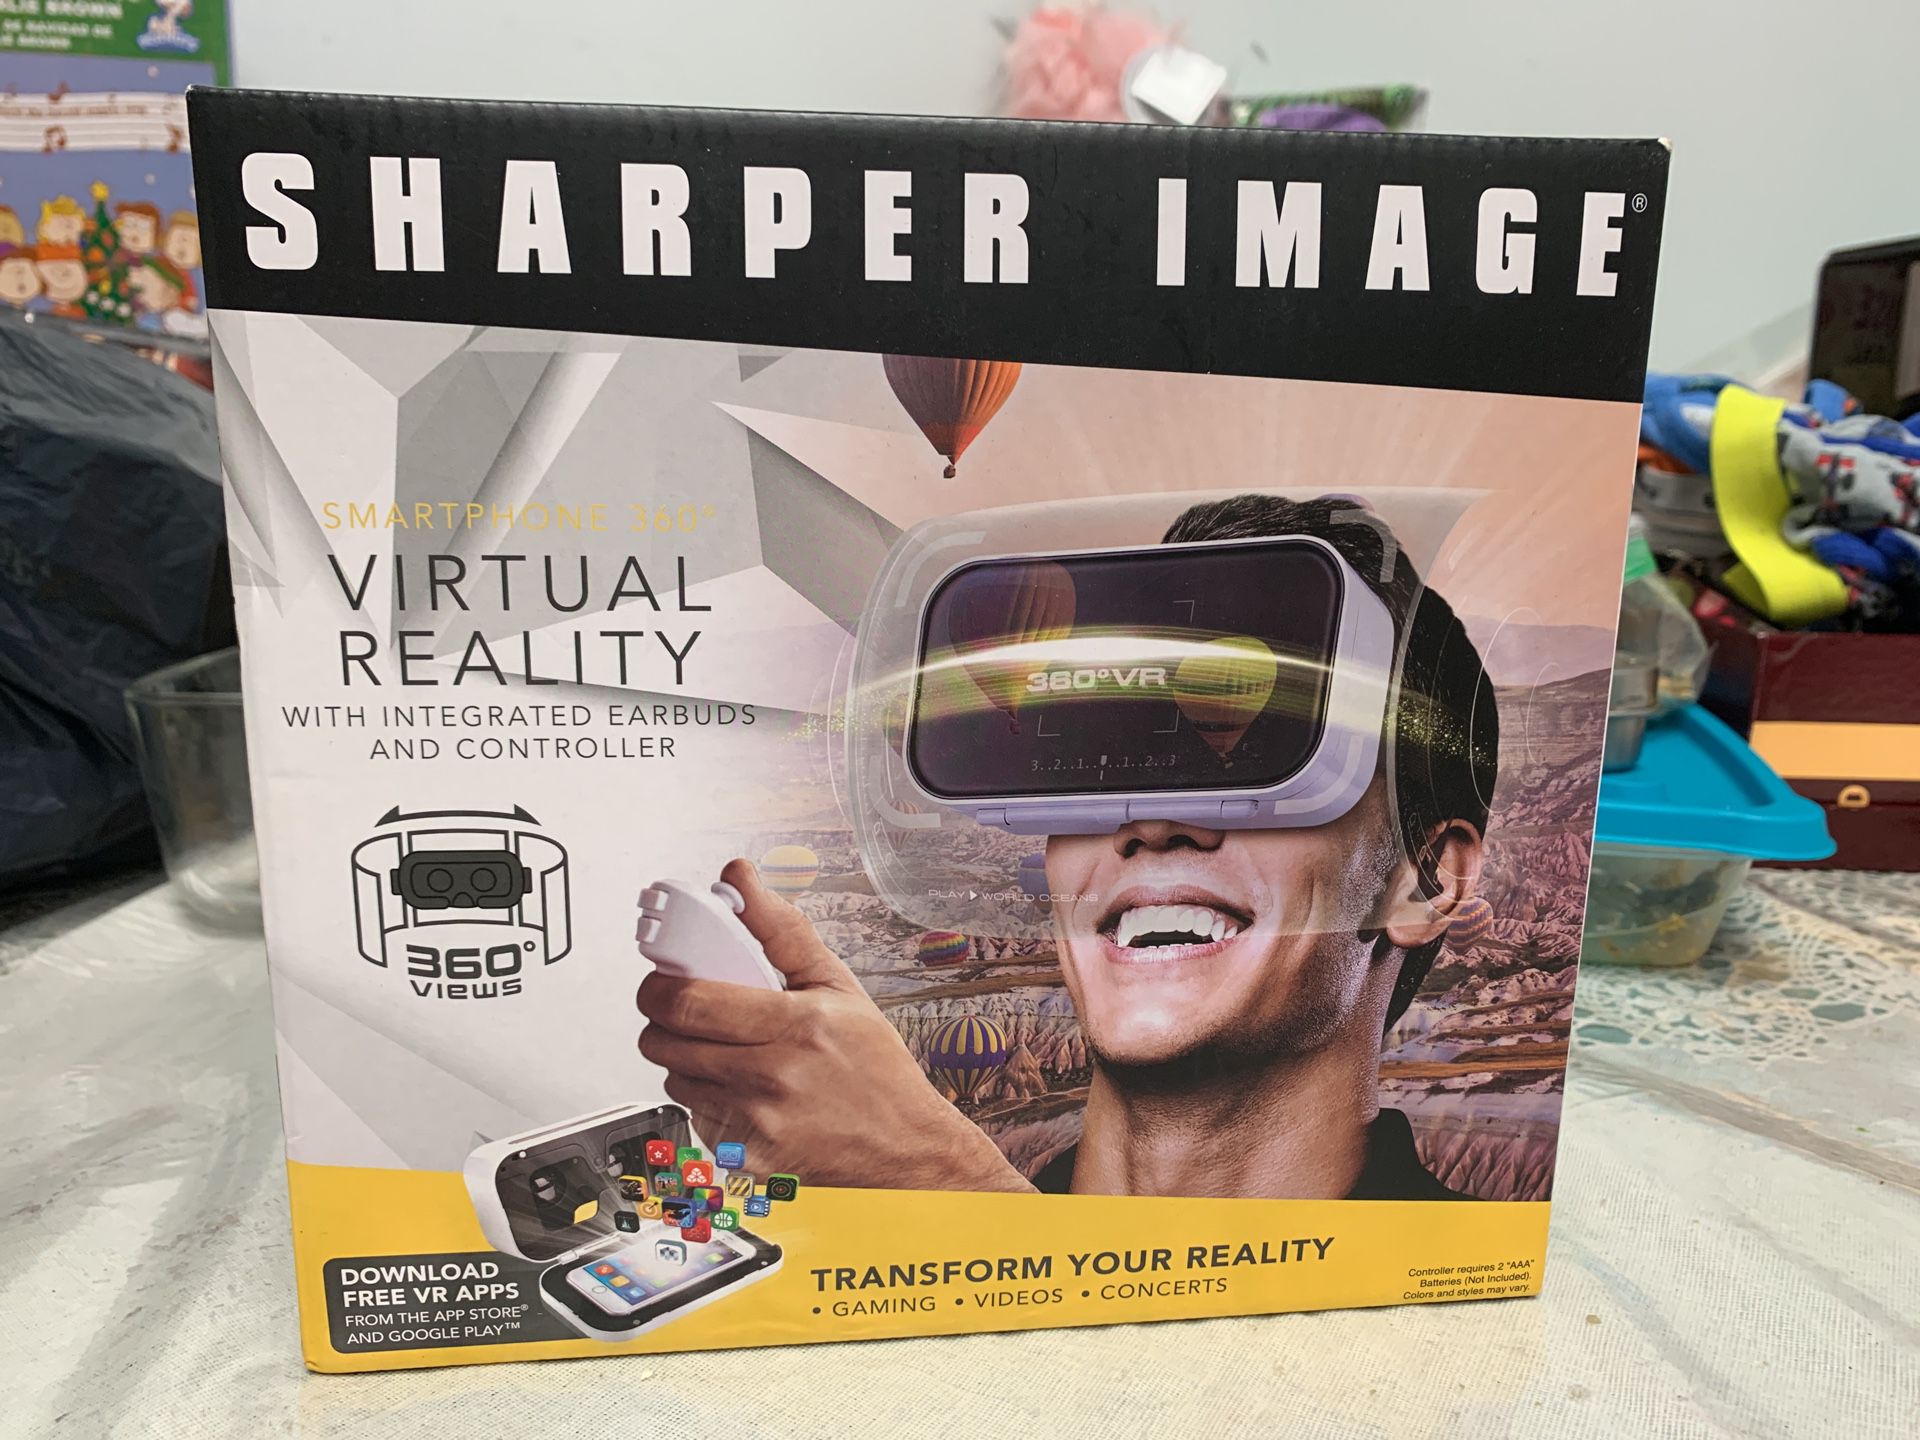 Sharper image Virtual reality